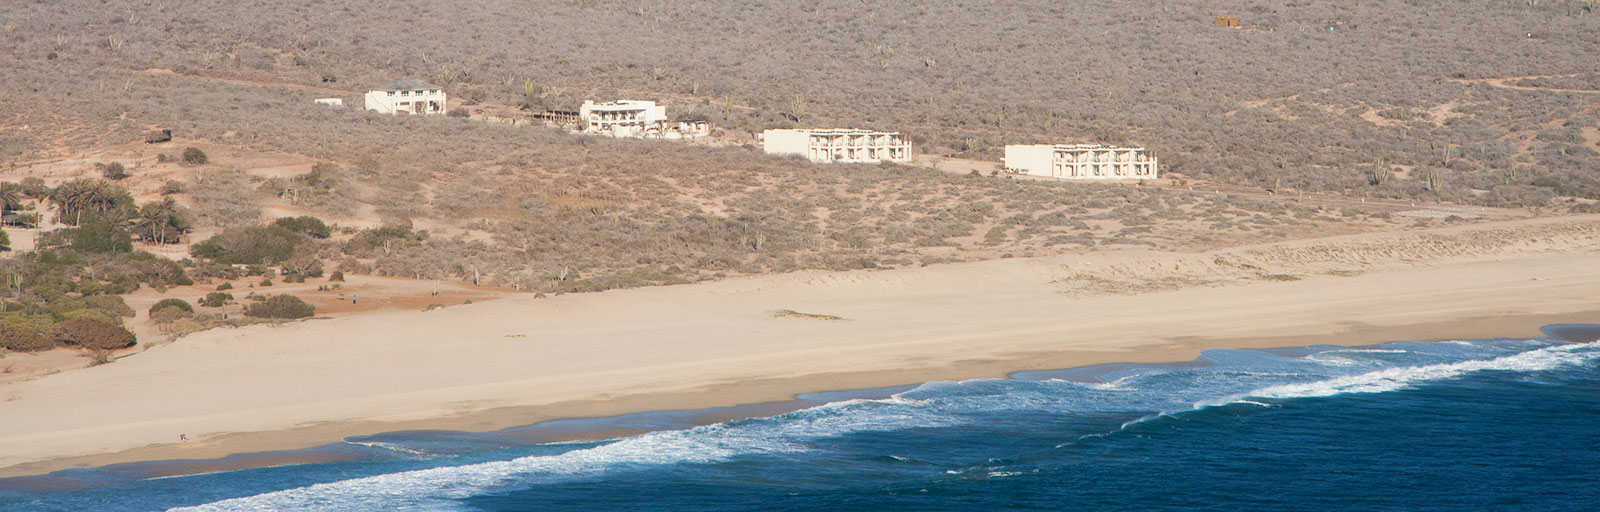 Luxury Yoga Retreats in Mexico: Yoga Retreat Center, Beach, & Ocean